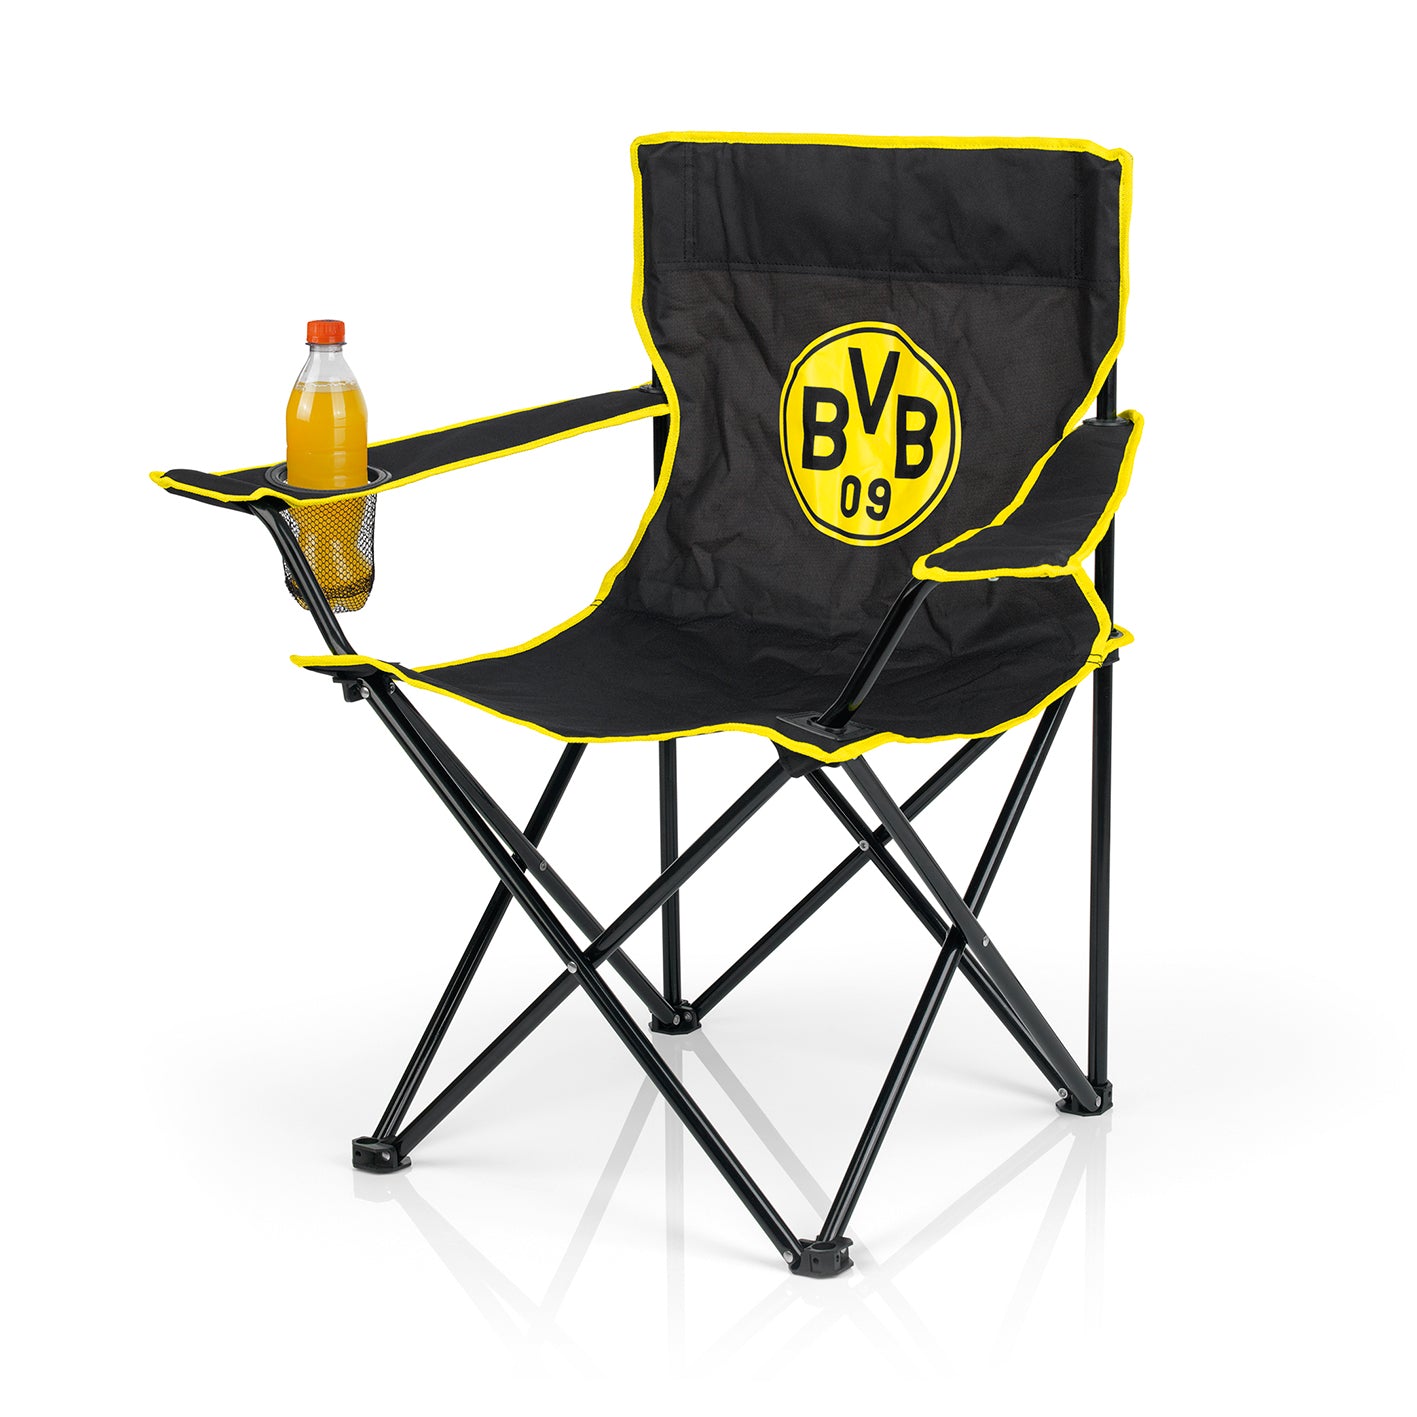 BVB Campingstuhl faltbar - 80x50 cm - schwarz/gelb mit Logo